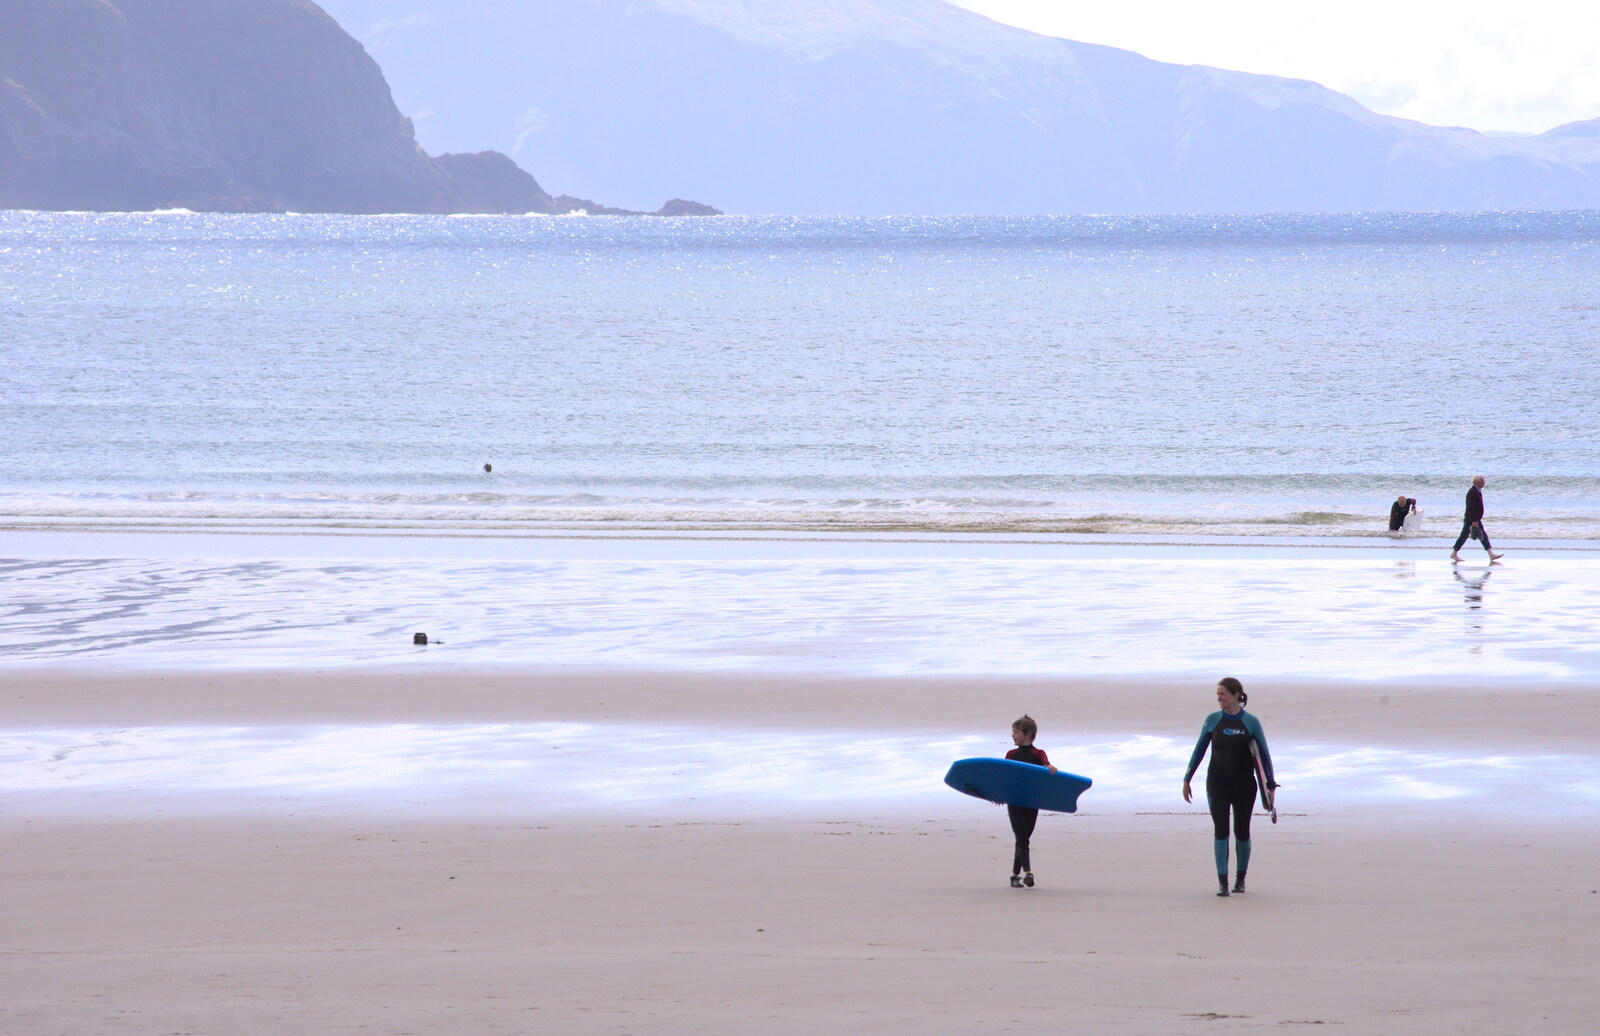 The boarders return from Surfing Achill Island, Oileán Acla, Maigh Eo, Ireland - 8th August 2017